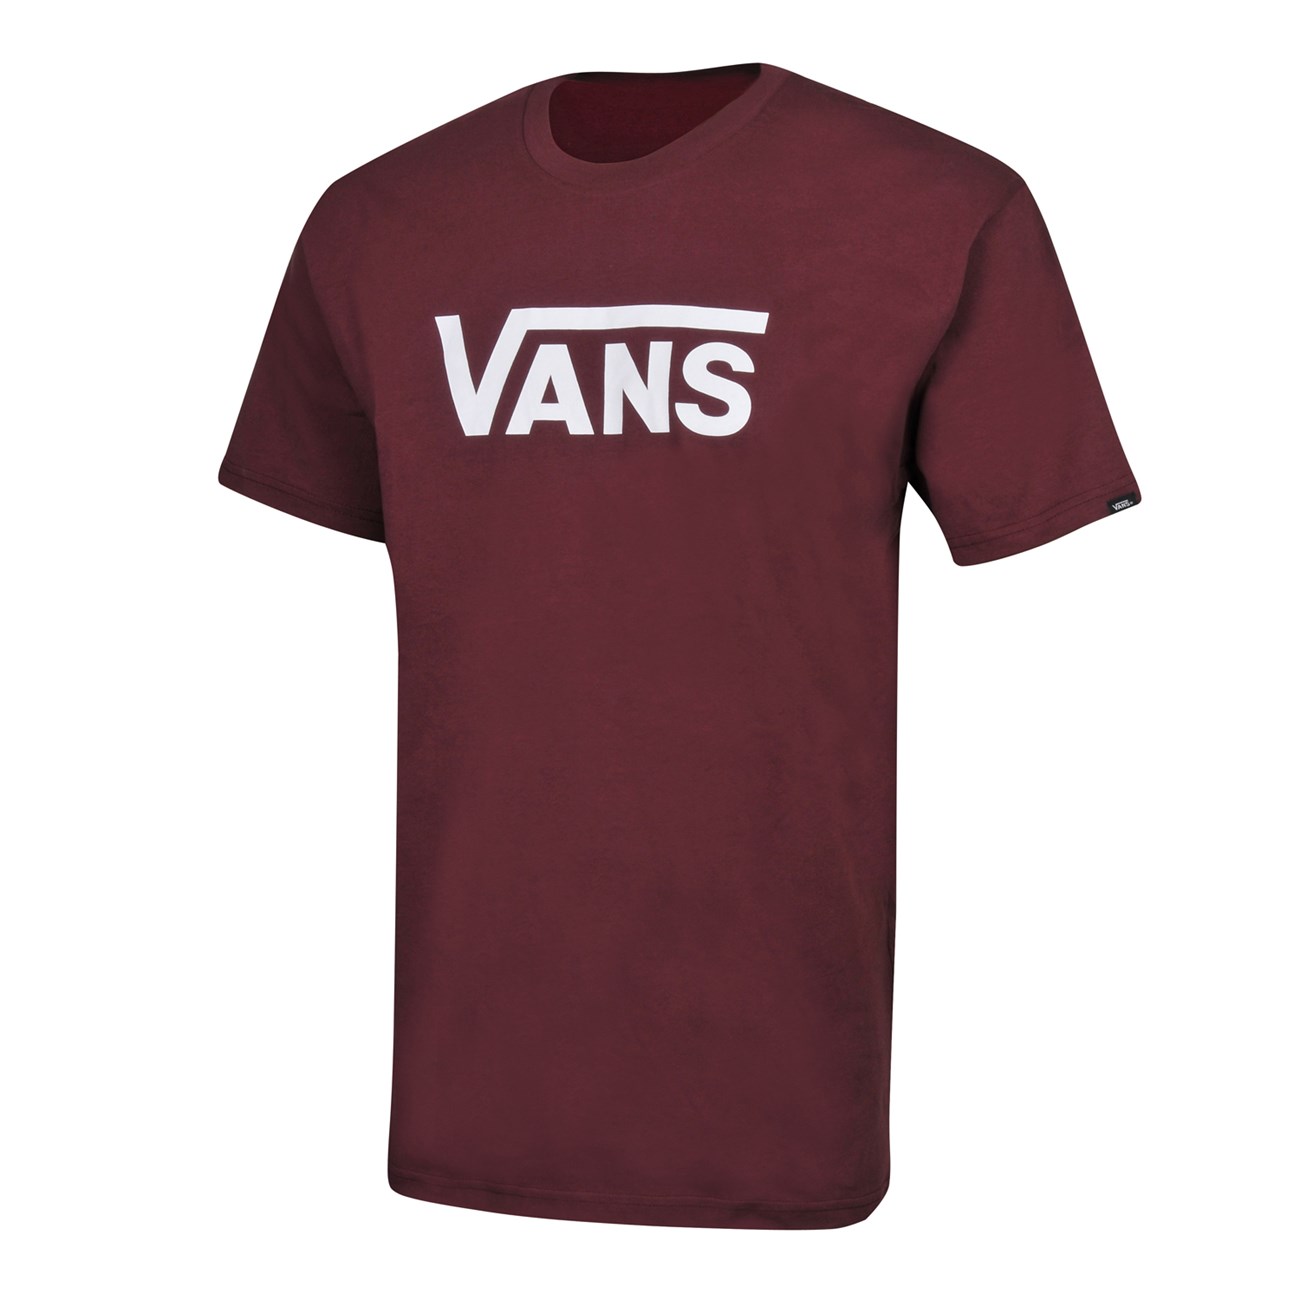 VANS Ανδρικό T-shirt Vans Classic VN000GGG-VNK1O - The Athlete's Foot